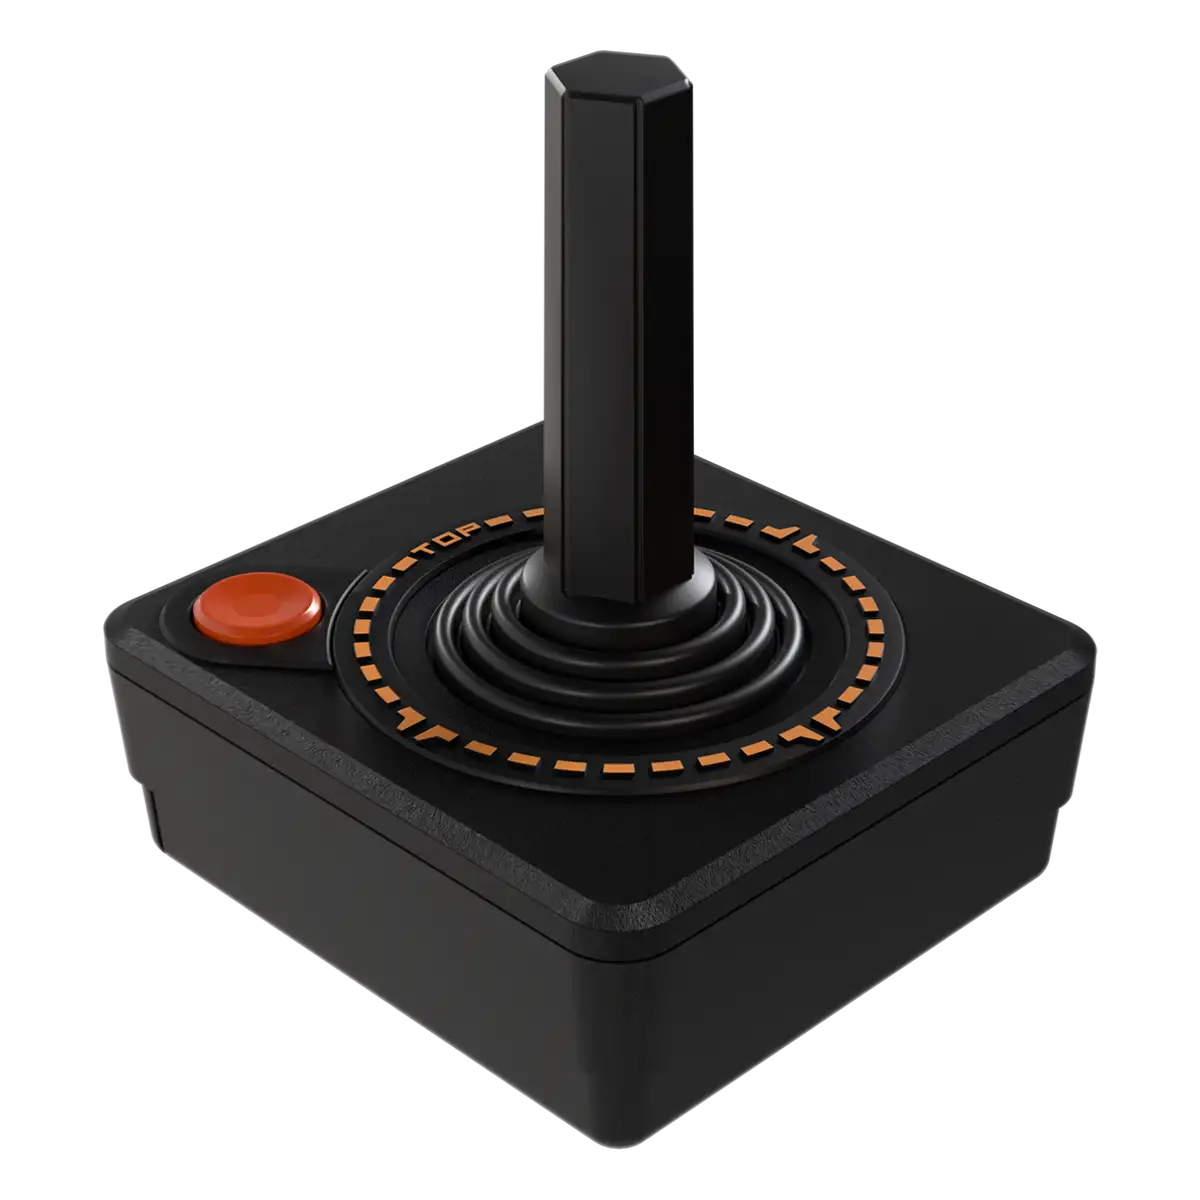 THECXSTICK (Solus Atari USB Joystick - Black) Thumbnail 3